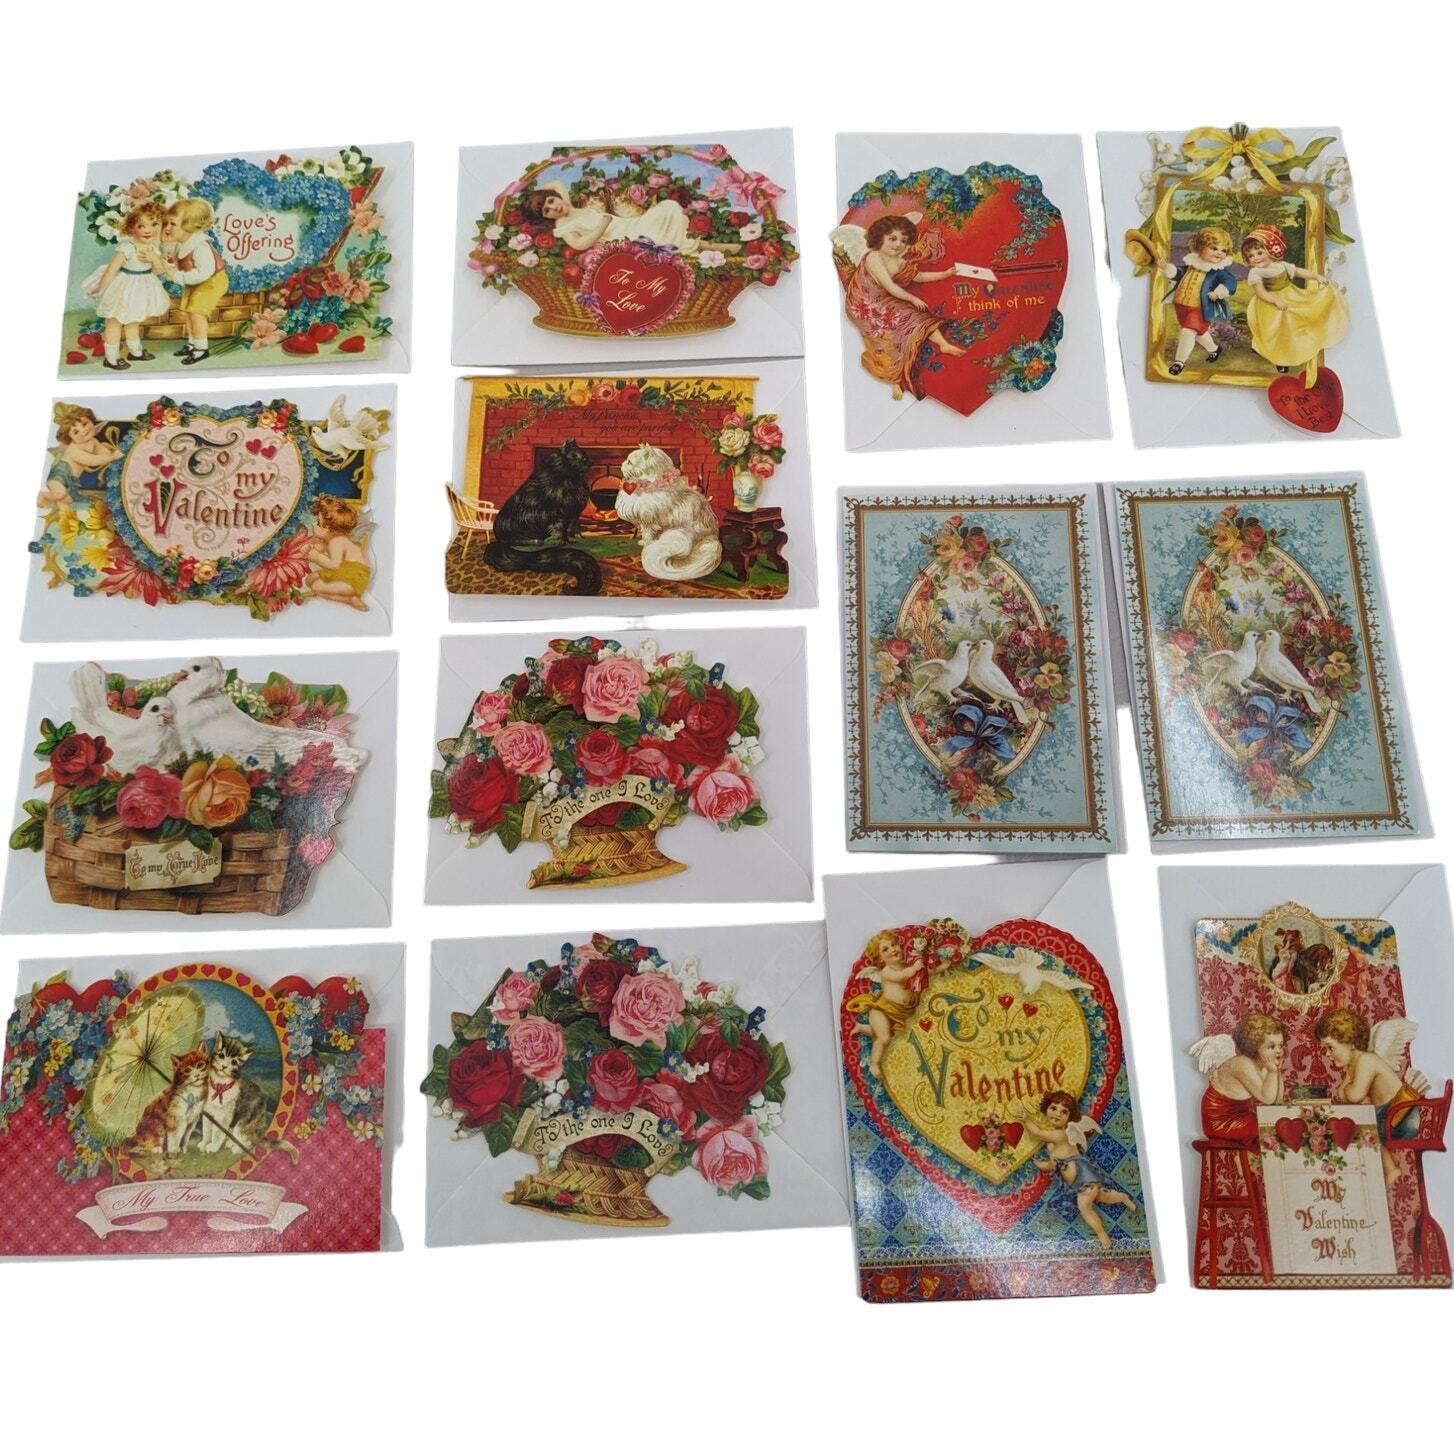 Set 14 Romantic Victorian Retro Vintage Valentines Cards Envelopes Punch Studio